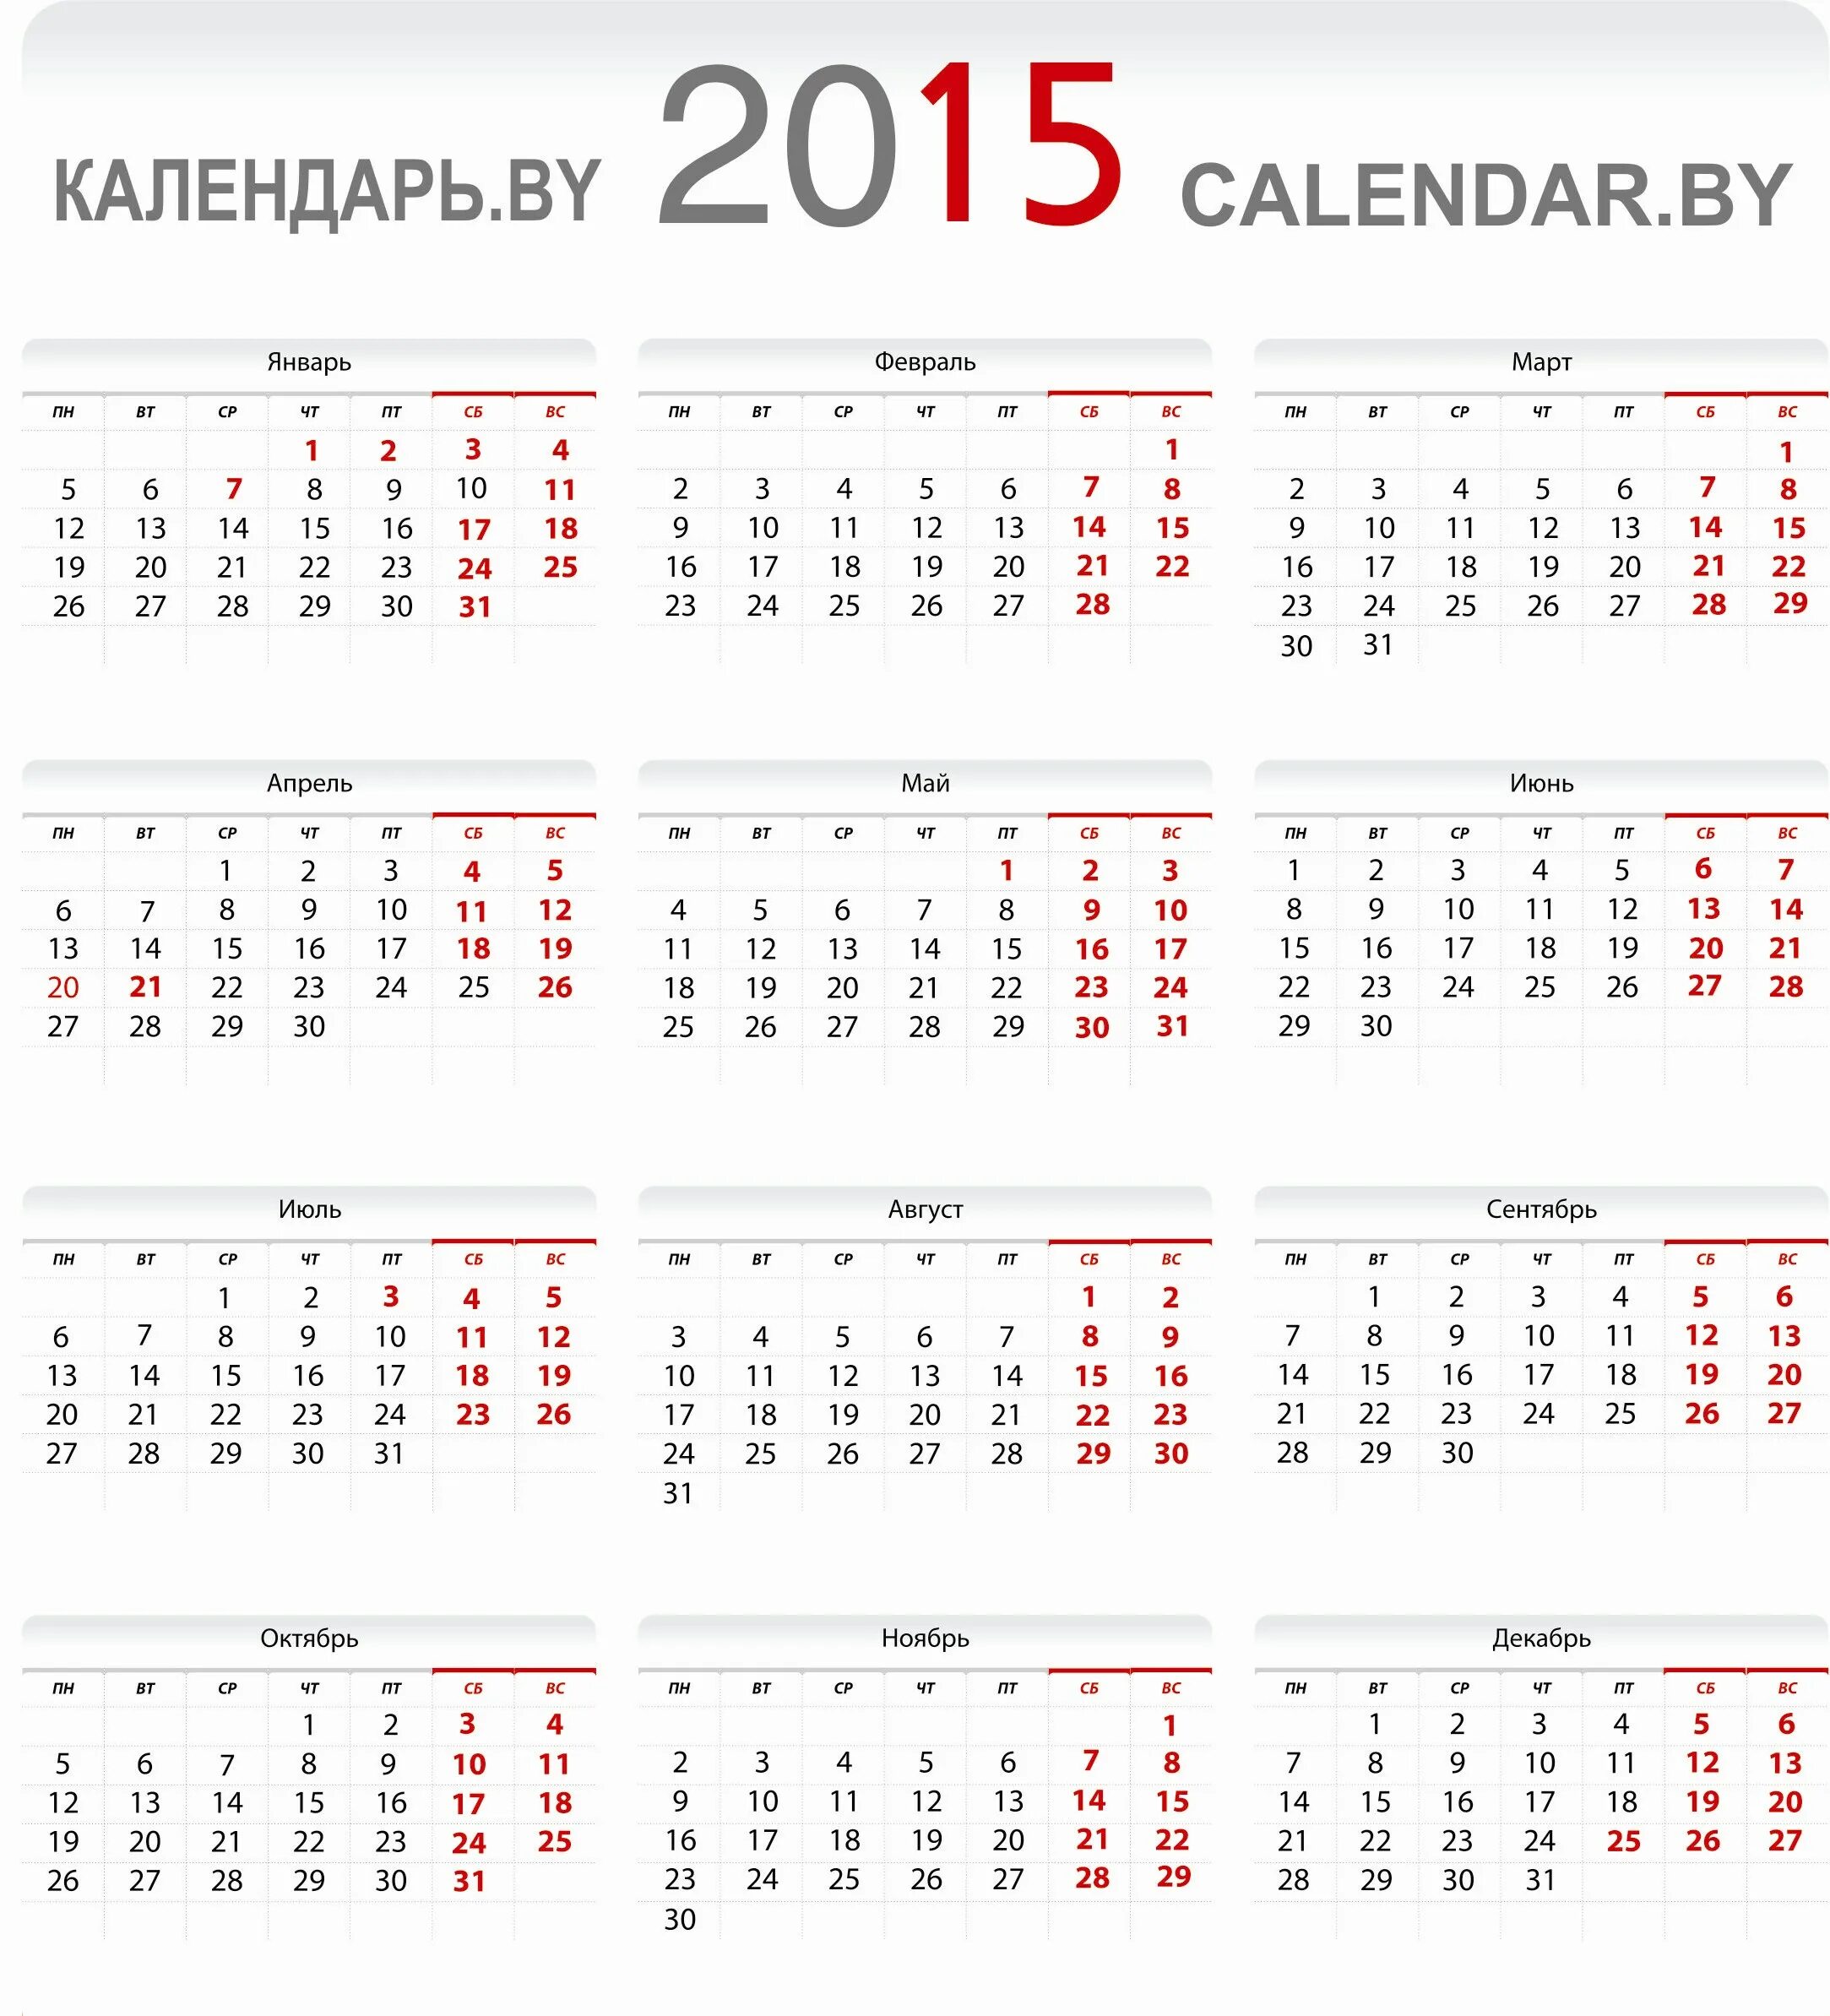 2014 год 2015 год количество. Календарь 2015. Календарь на 2015 год. Календарь 2015г. Календарь 2015 года по месяцам.